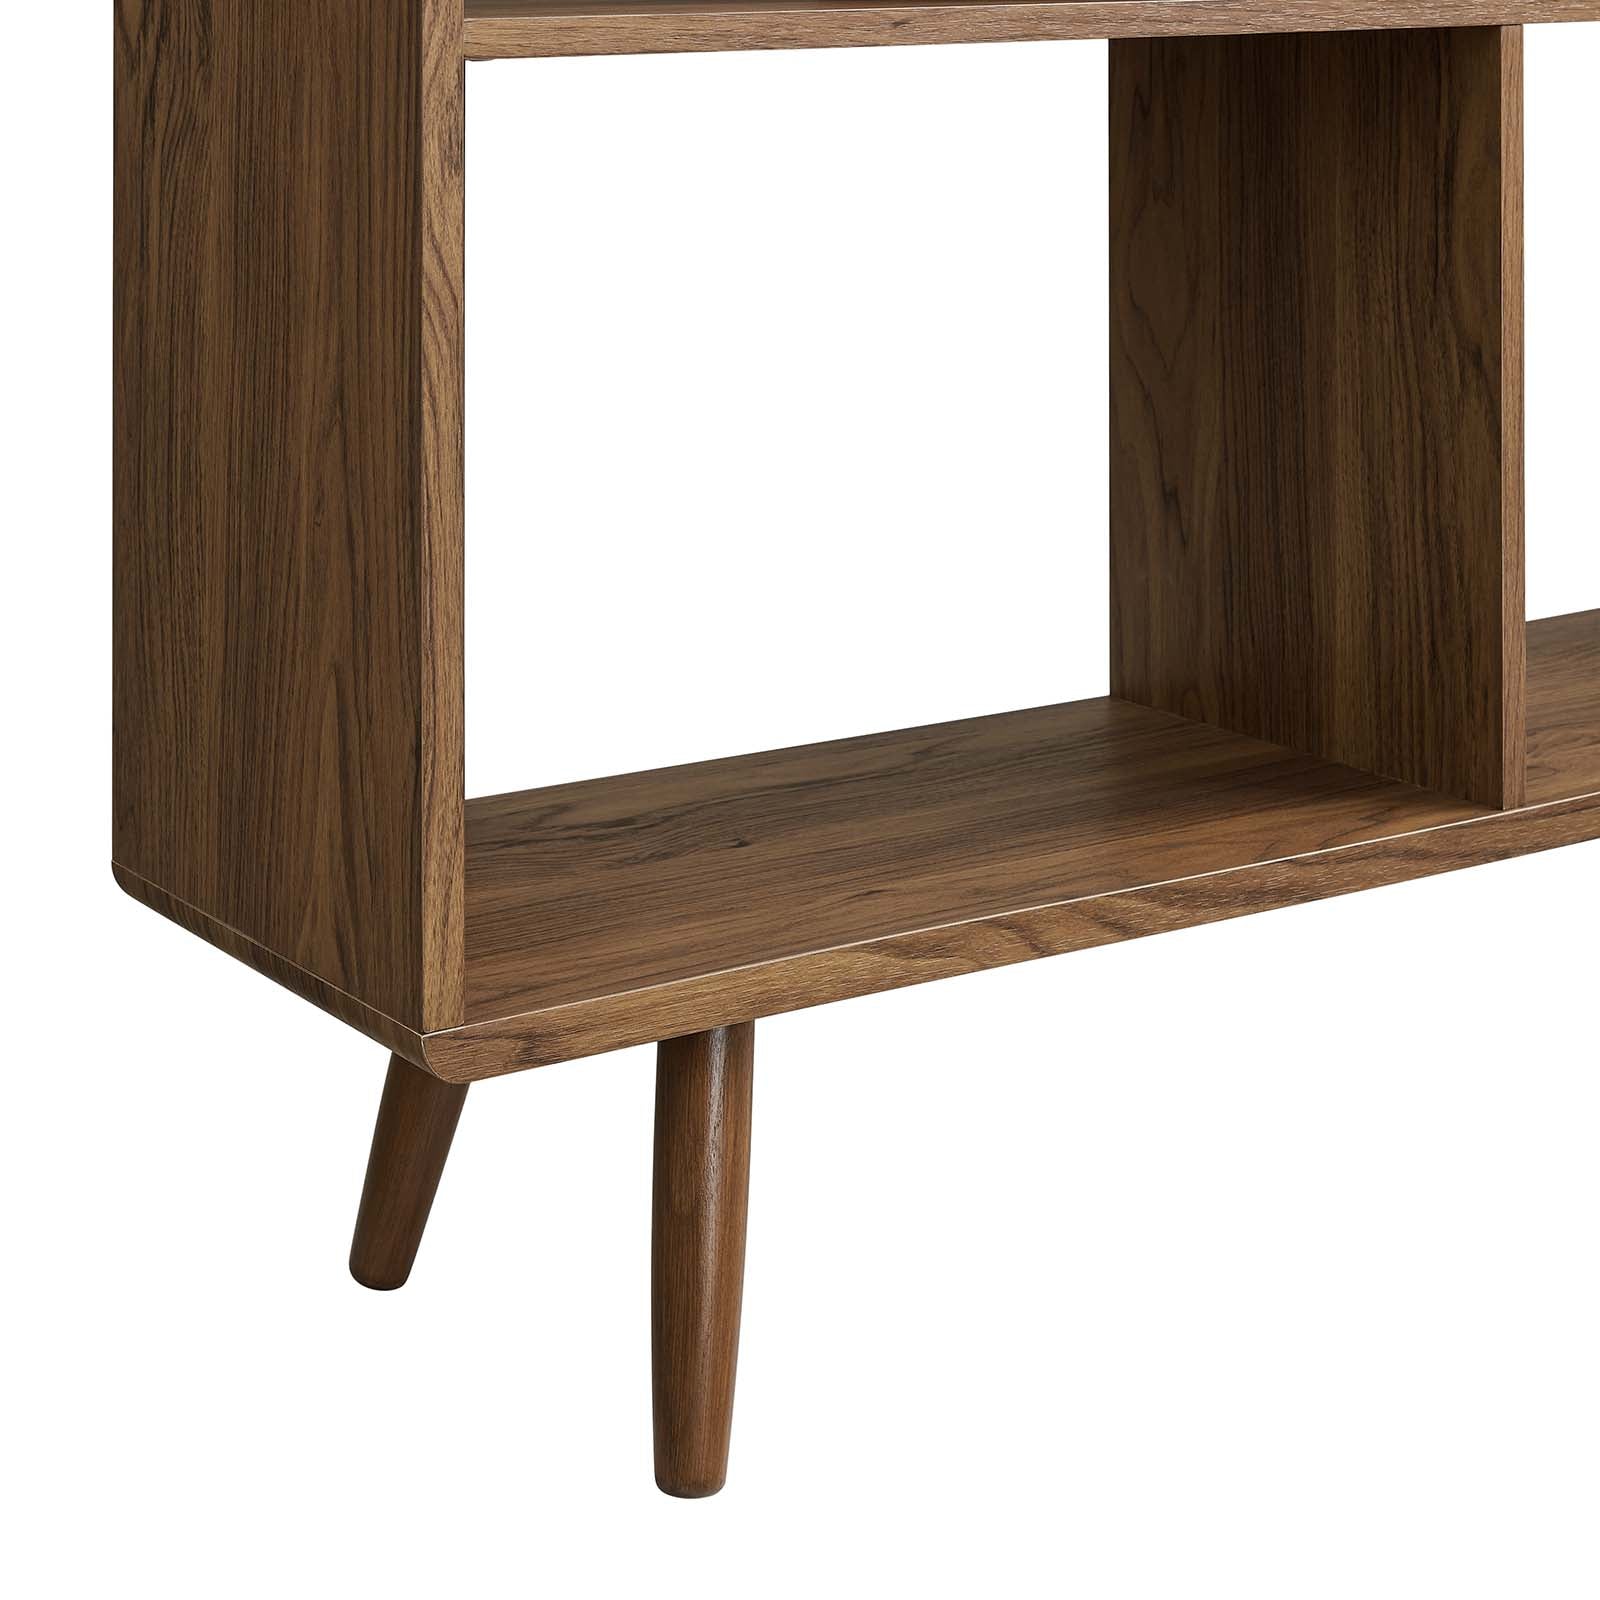 Transmit 7 Shelf Wood Grain Bookcase - East Shore Modern Home Furnishings